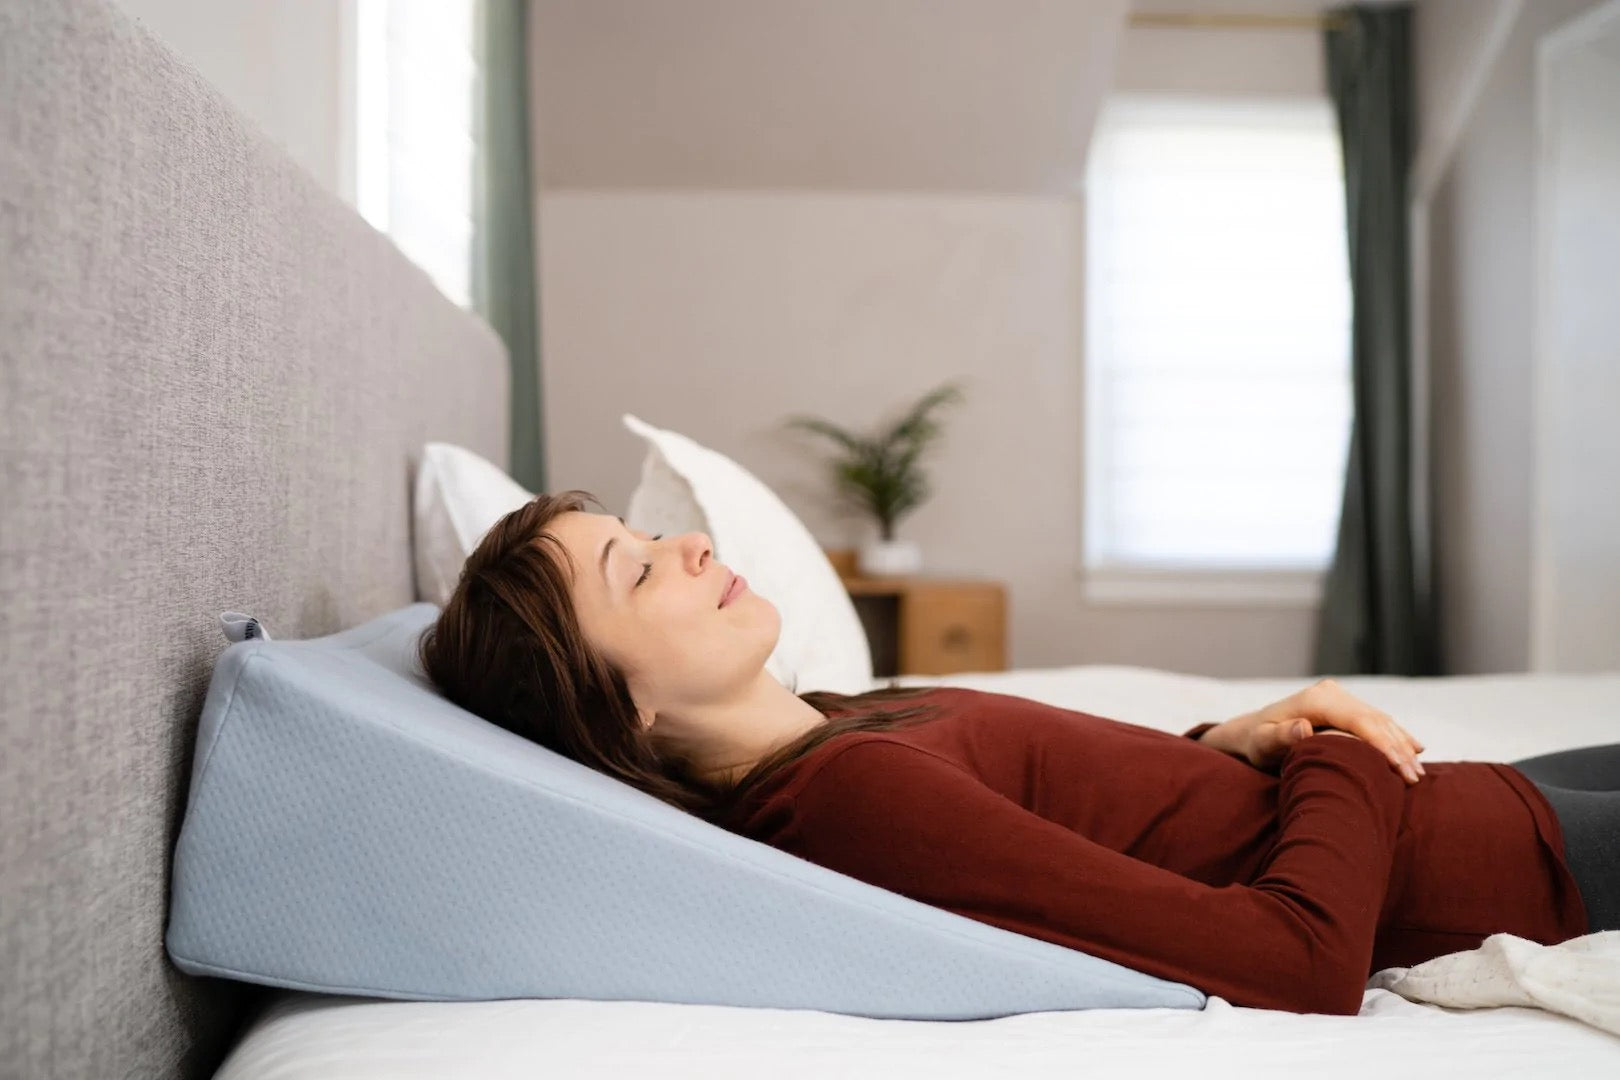 Triangular Wedge Cushion Back Support Stomach Acid Reflux Sleep